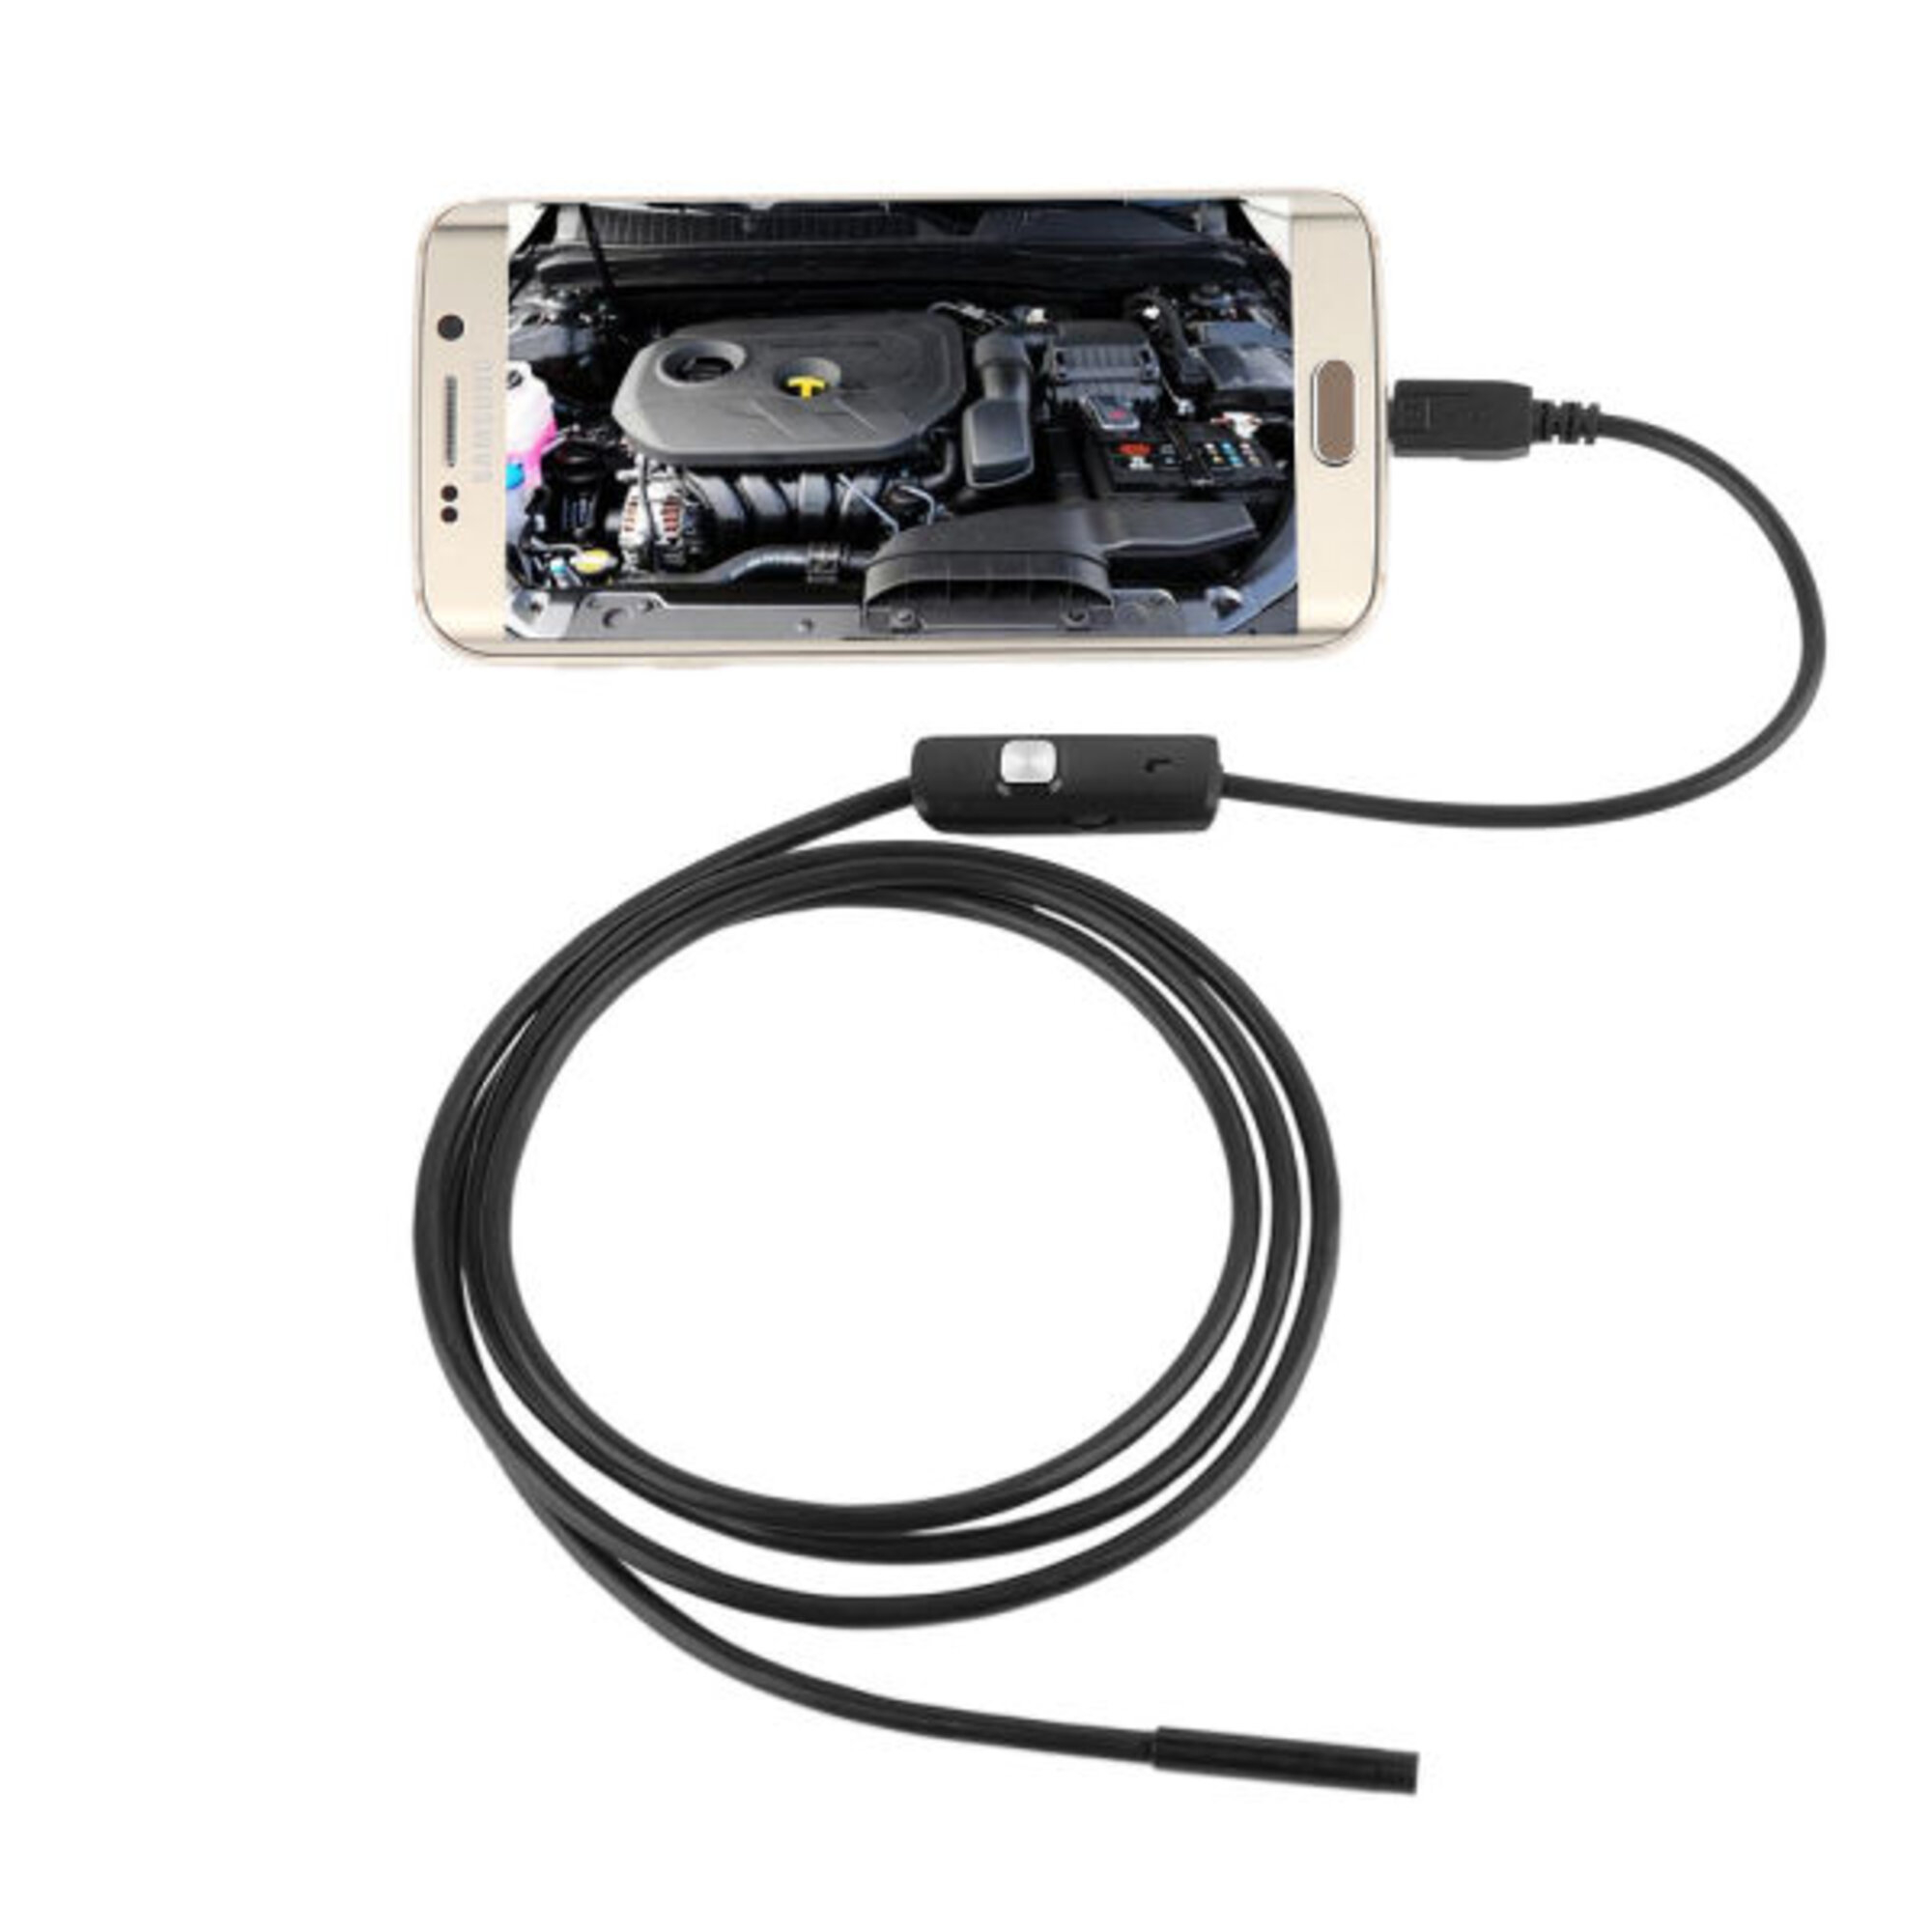 PC Android Endoskop / Inspektionskamera - microUSB, IP67 - 1m